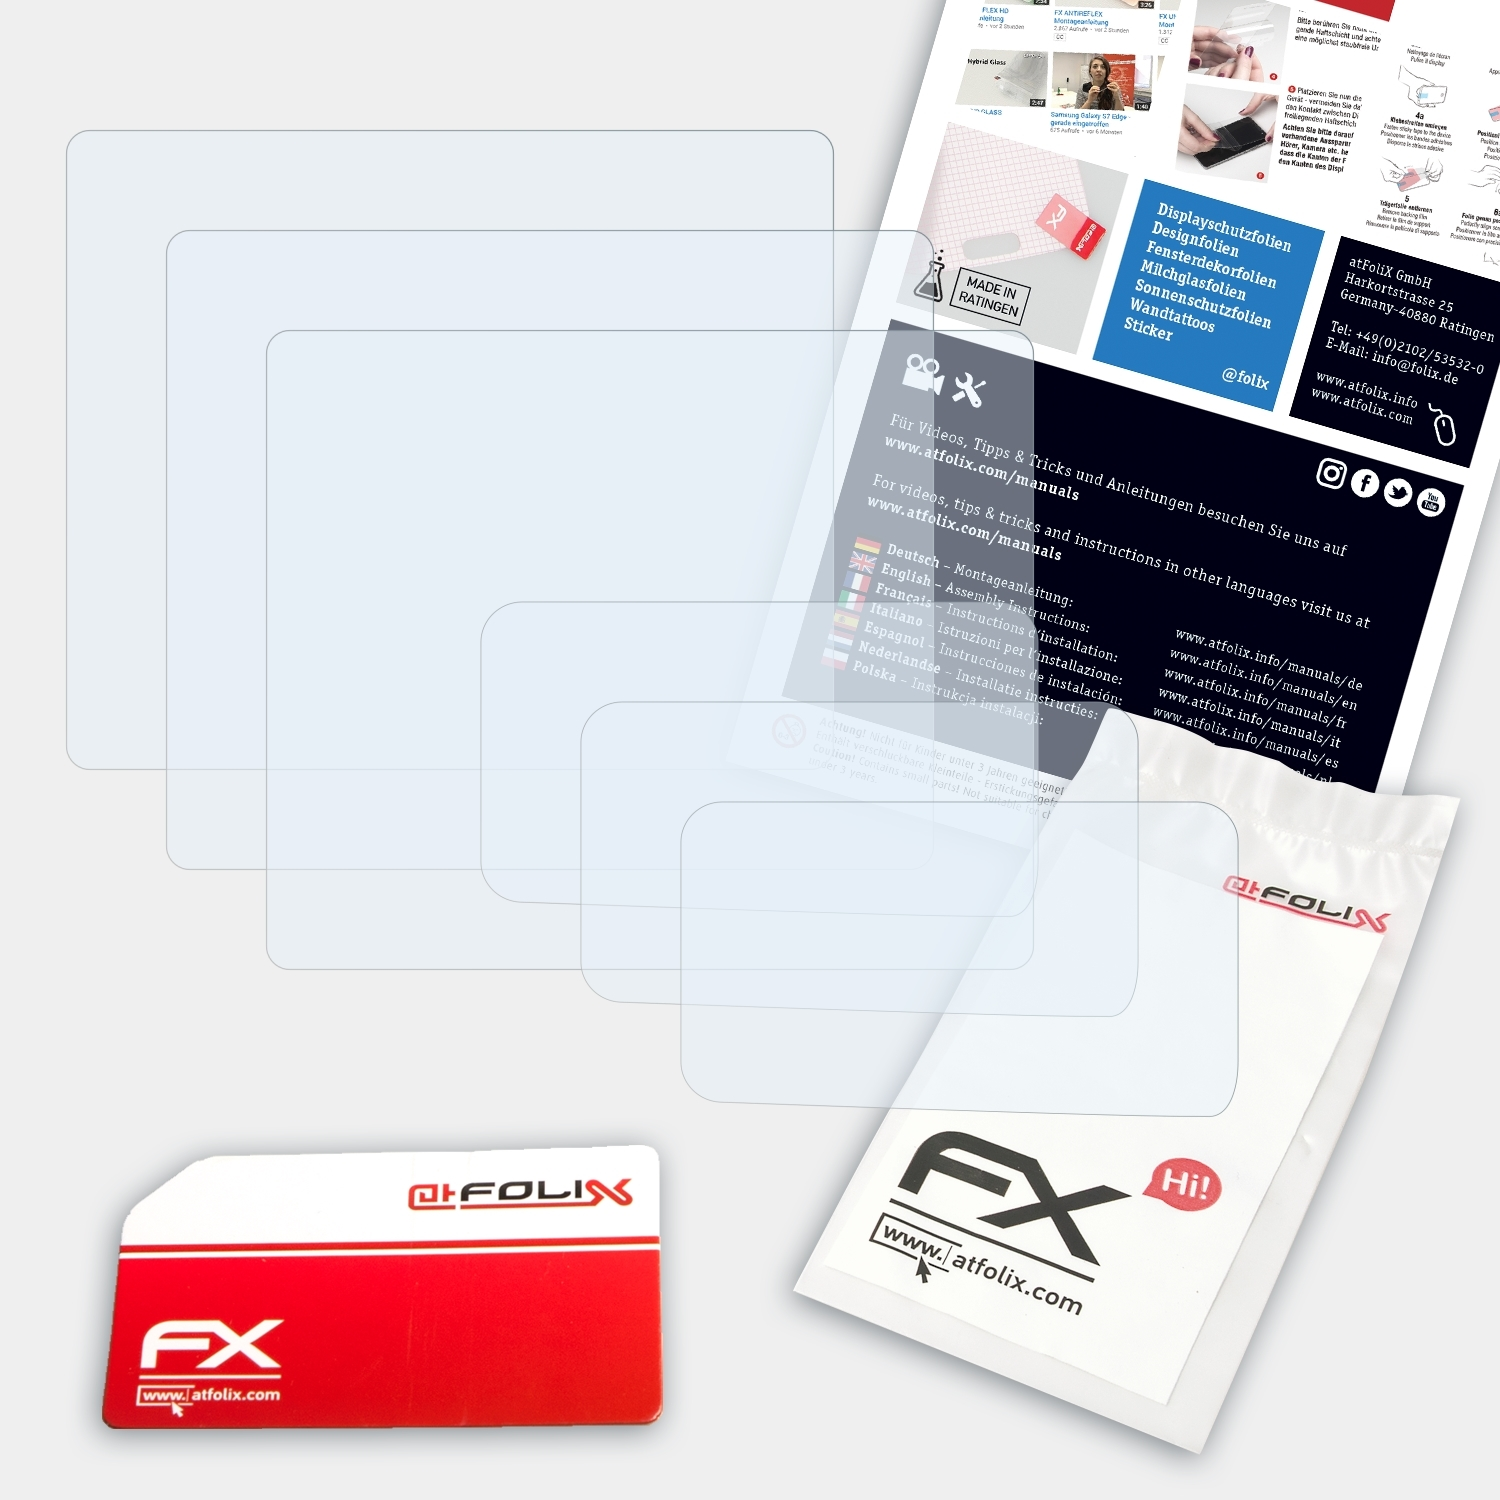 ATFOLIX 3x FX-Clear Displayschutz(für K10D) Pentax